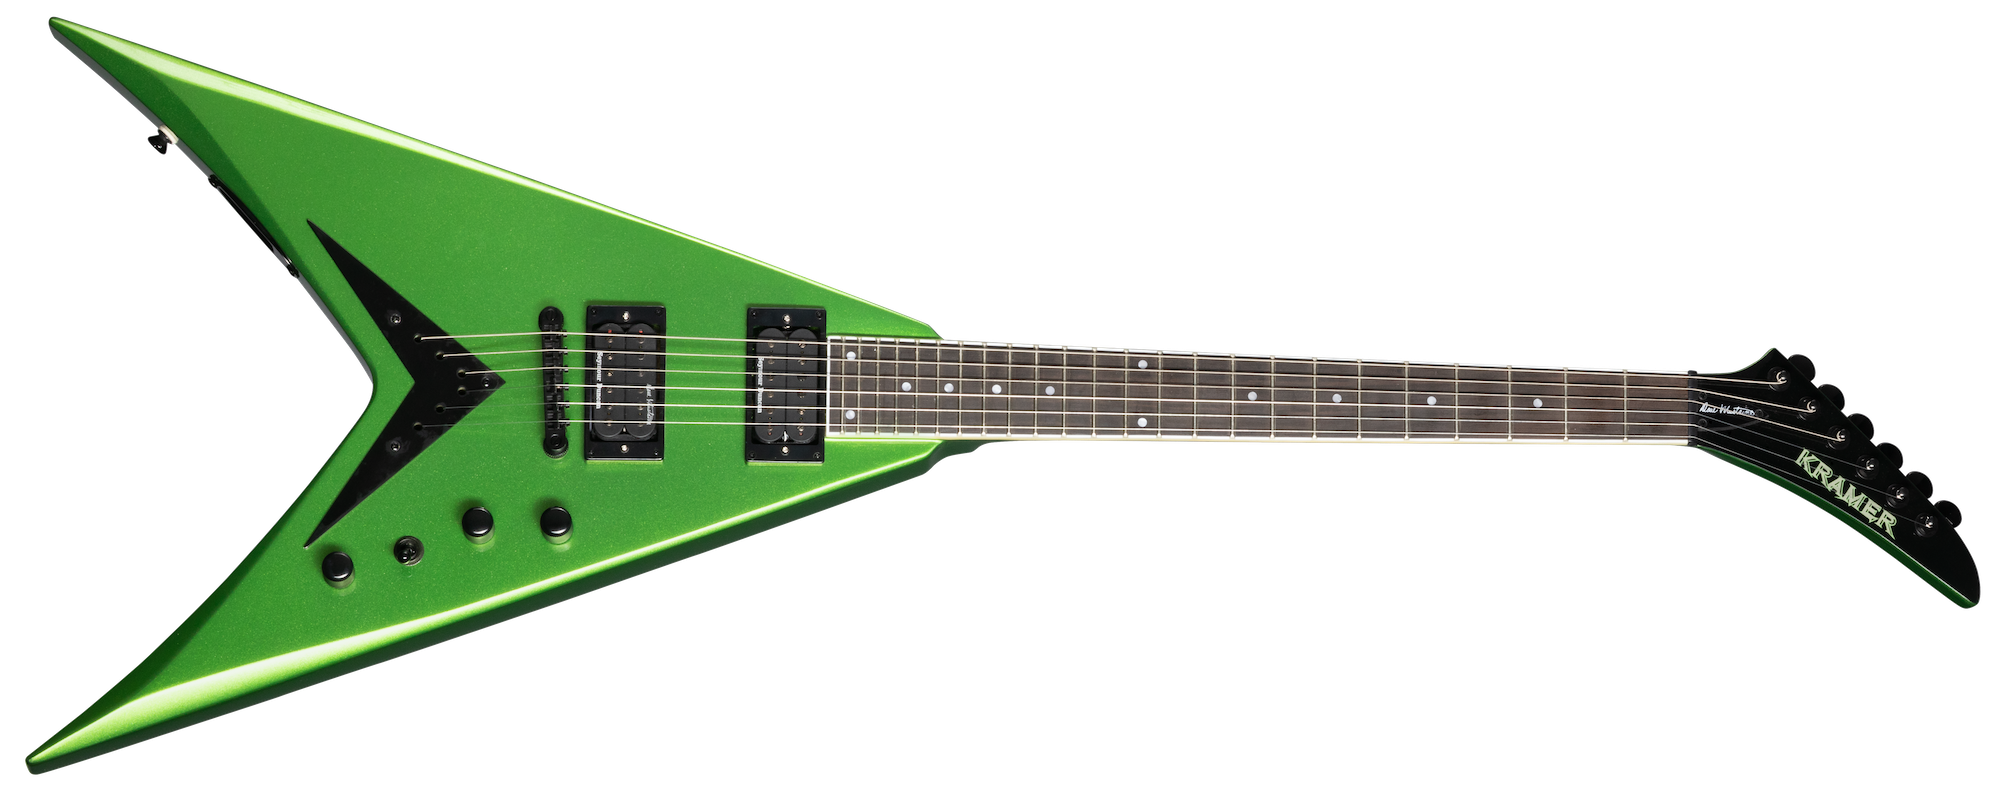 Dave Mustaine Vanguard Rust In Peace Alien Tech Green